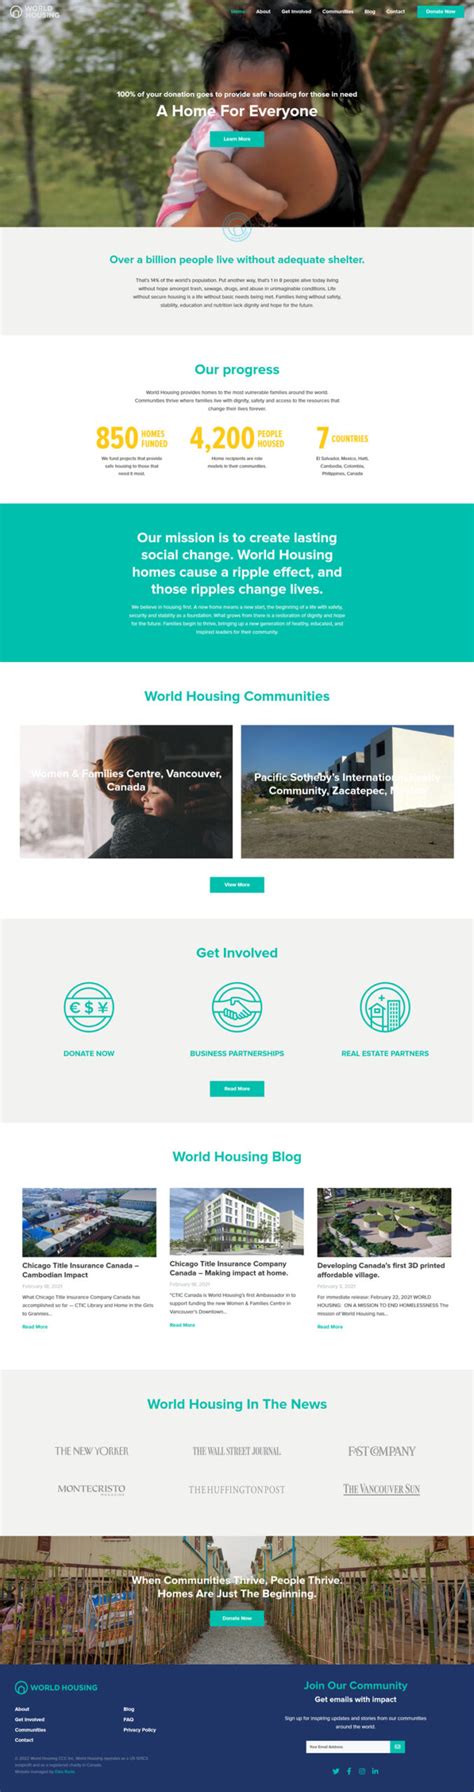 World Housing Dataroots Business Solutions Inc